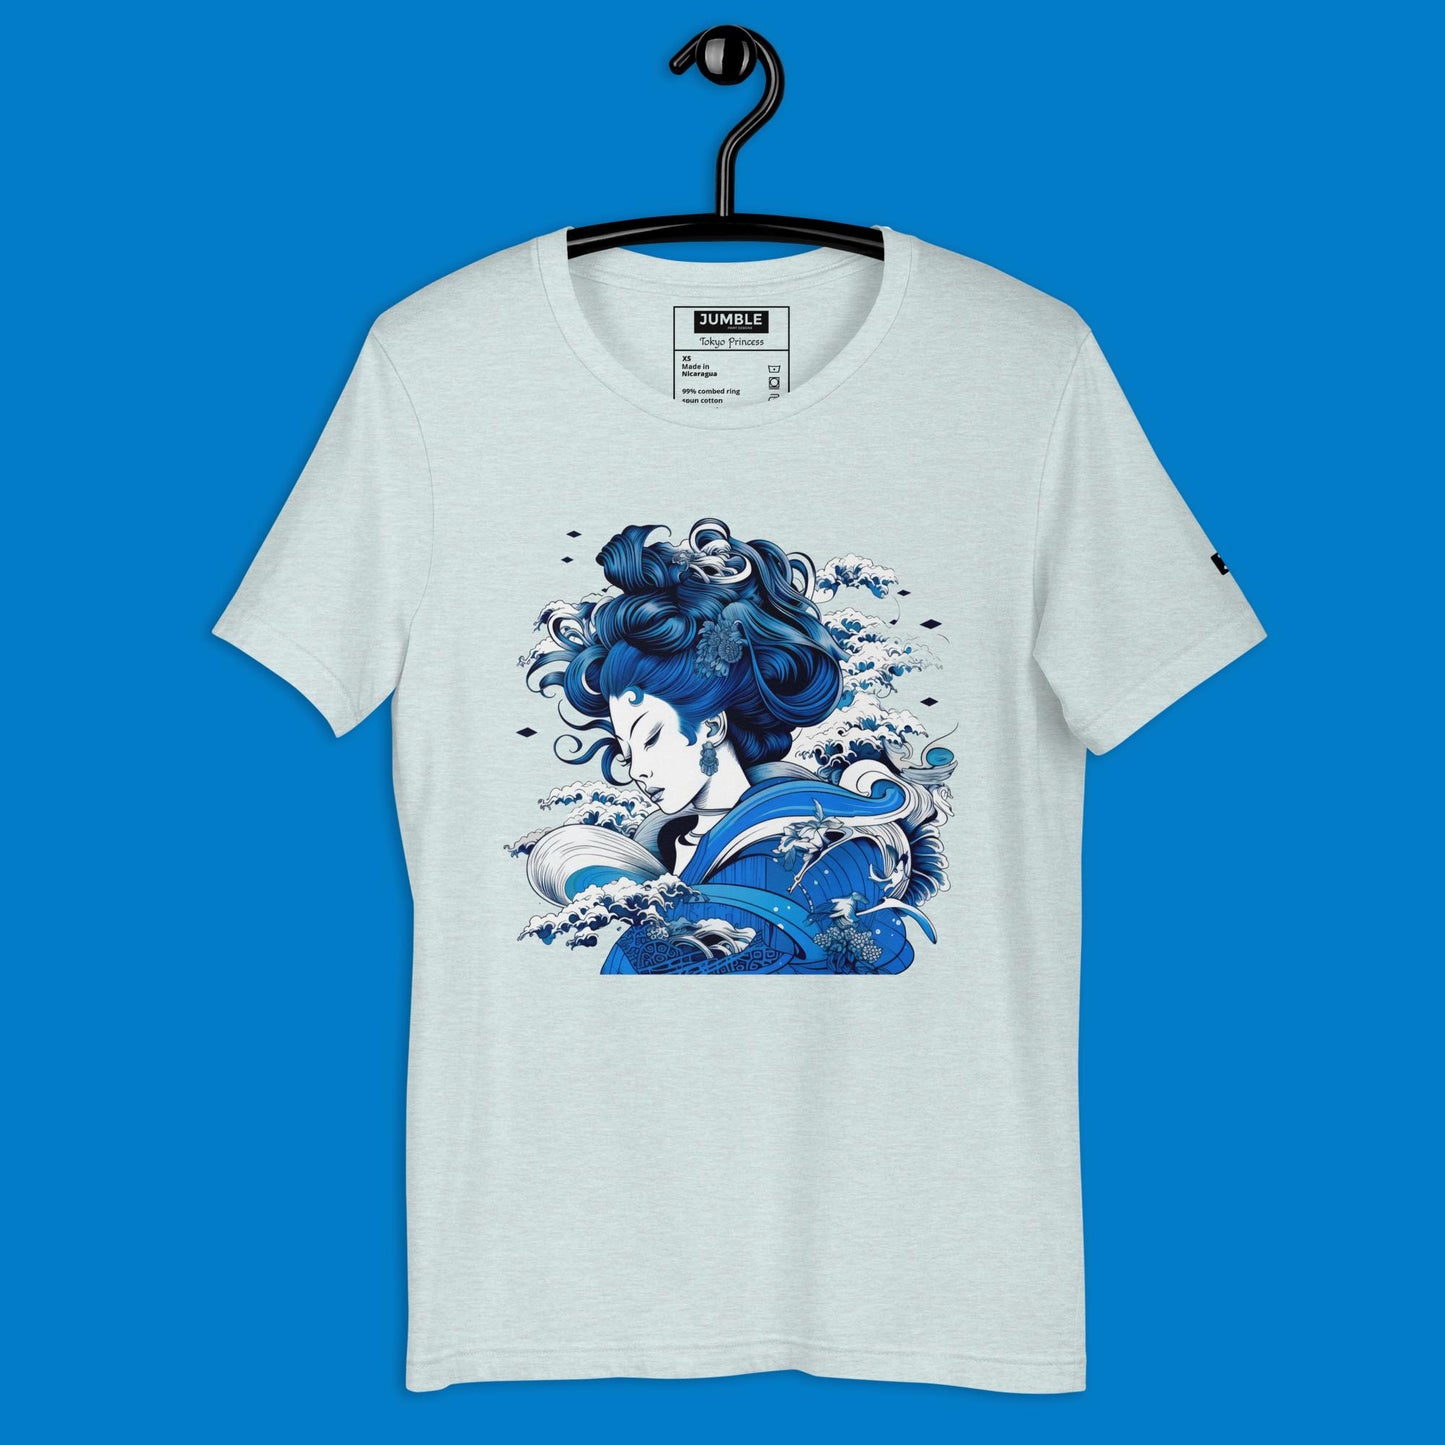 Tokyo Princess Unisex t-shirt in prism ice blue, on hanger